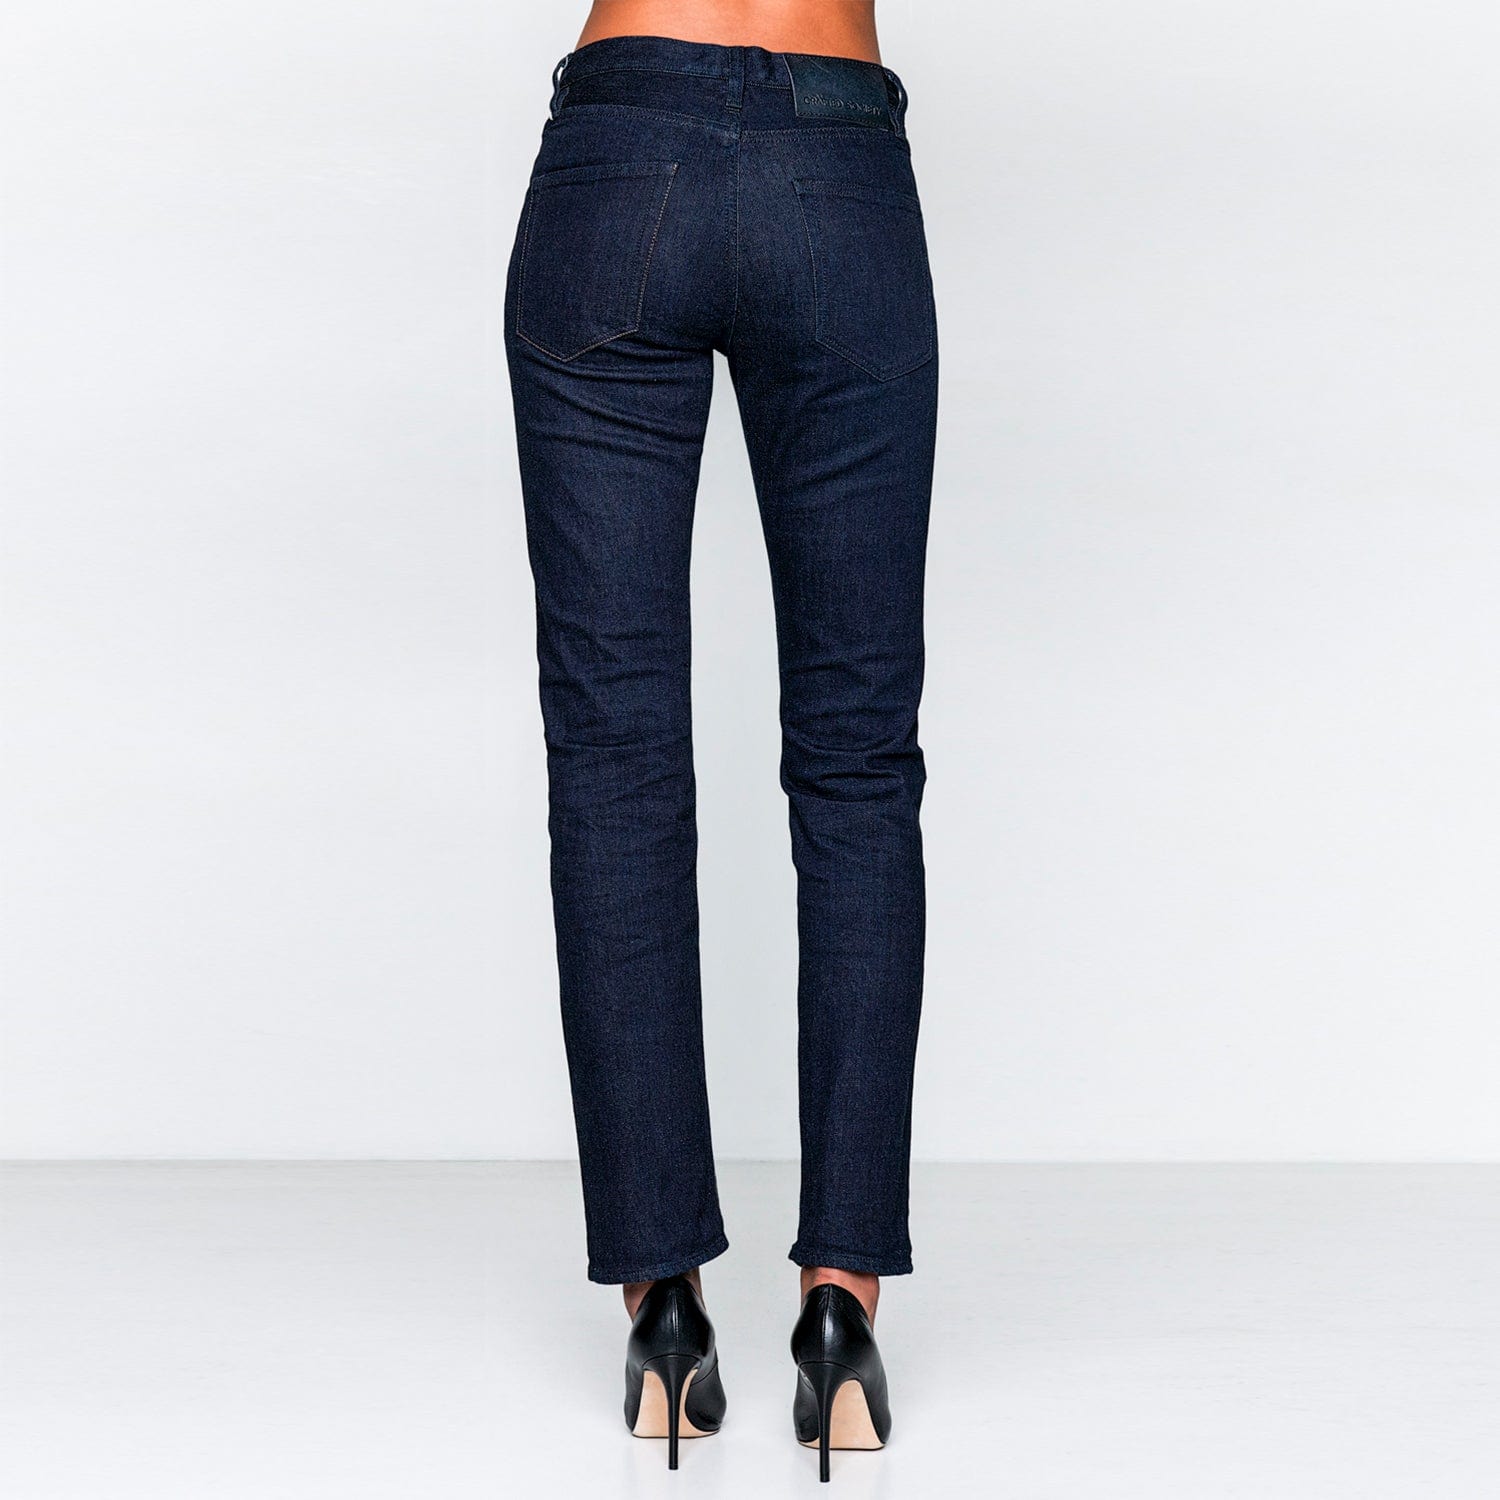 loreta jeans indigo blue back view